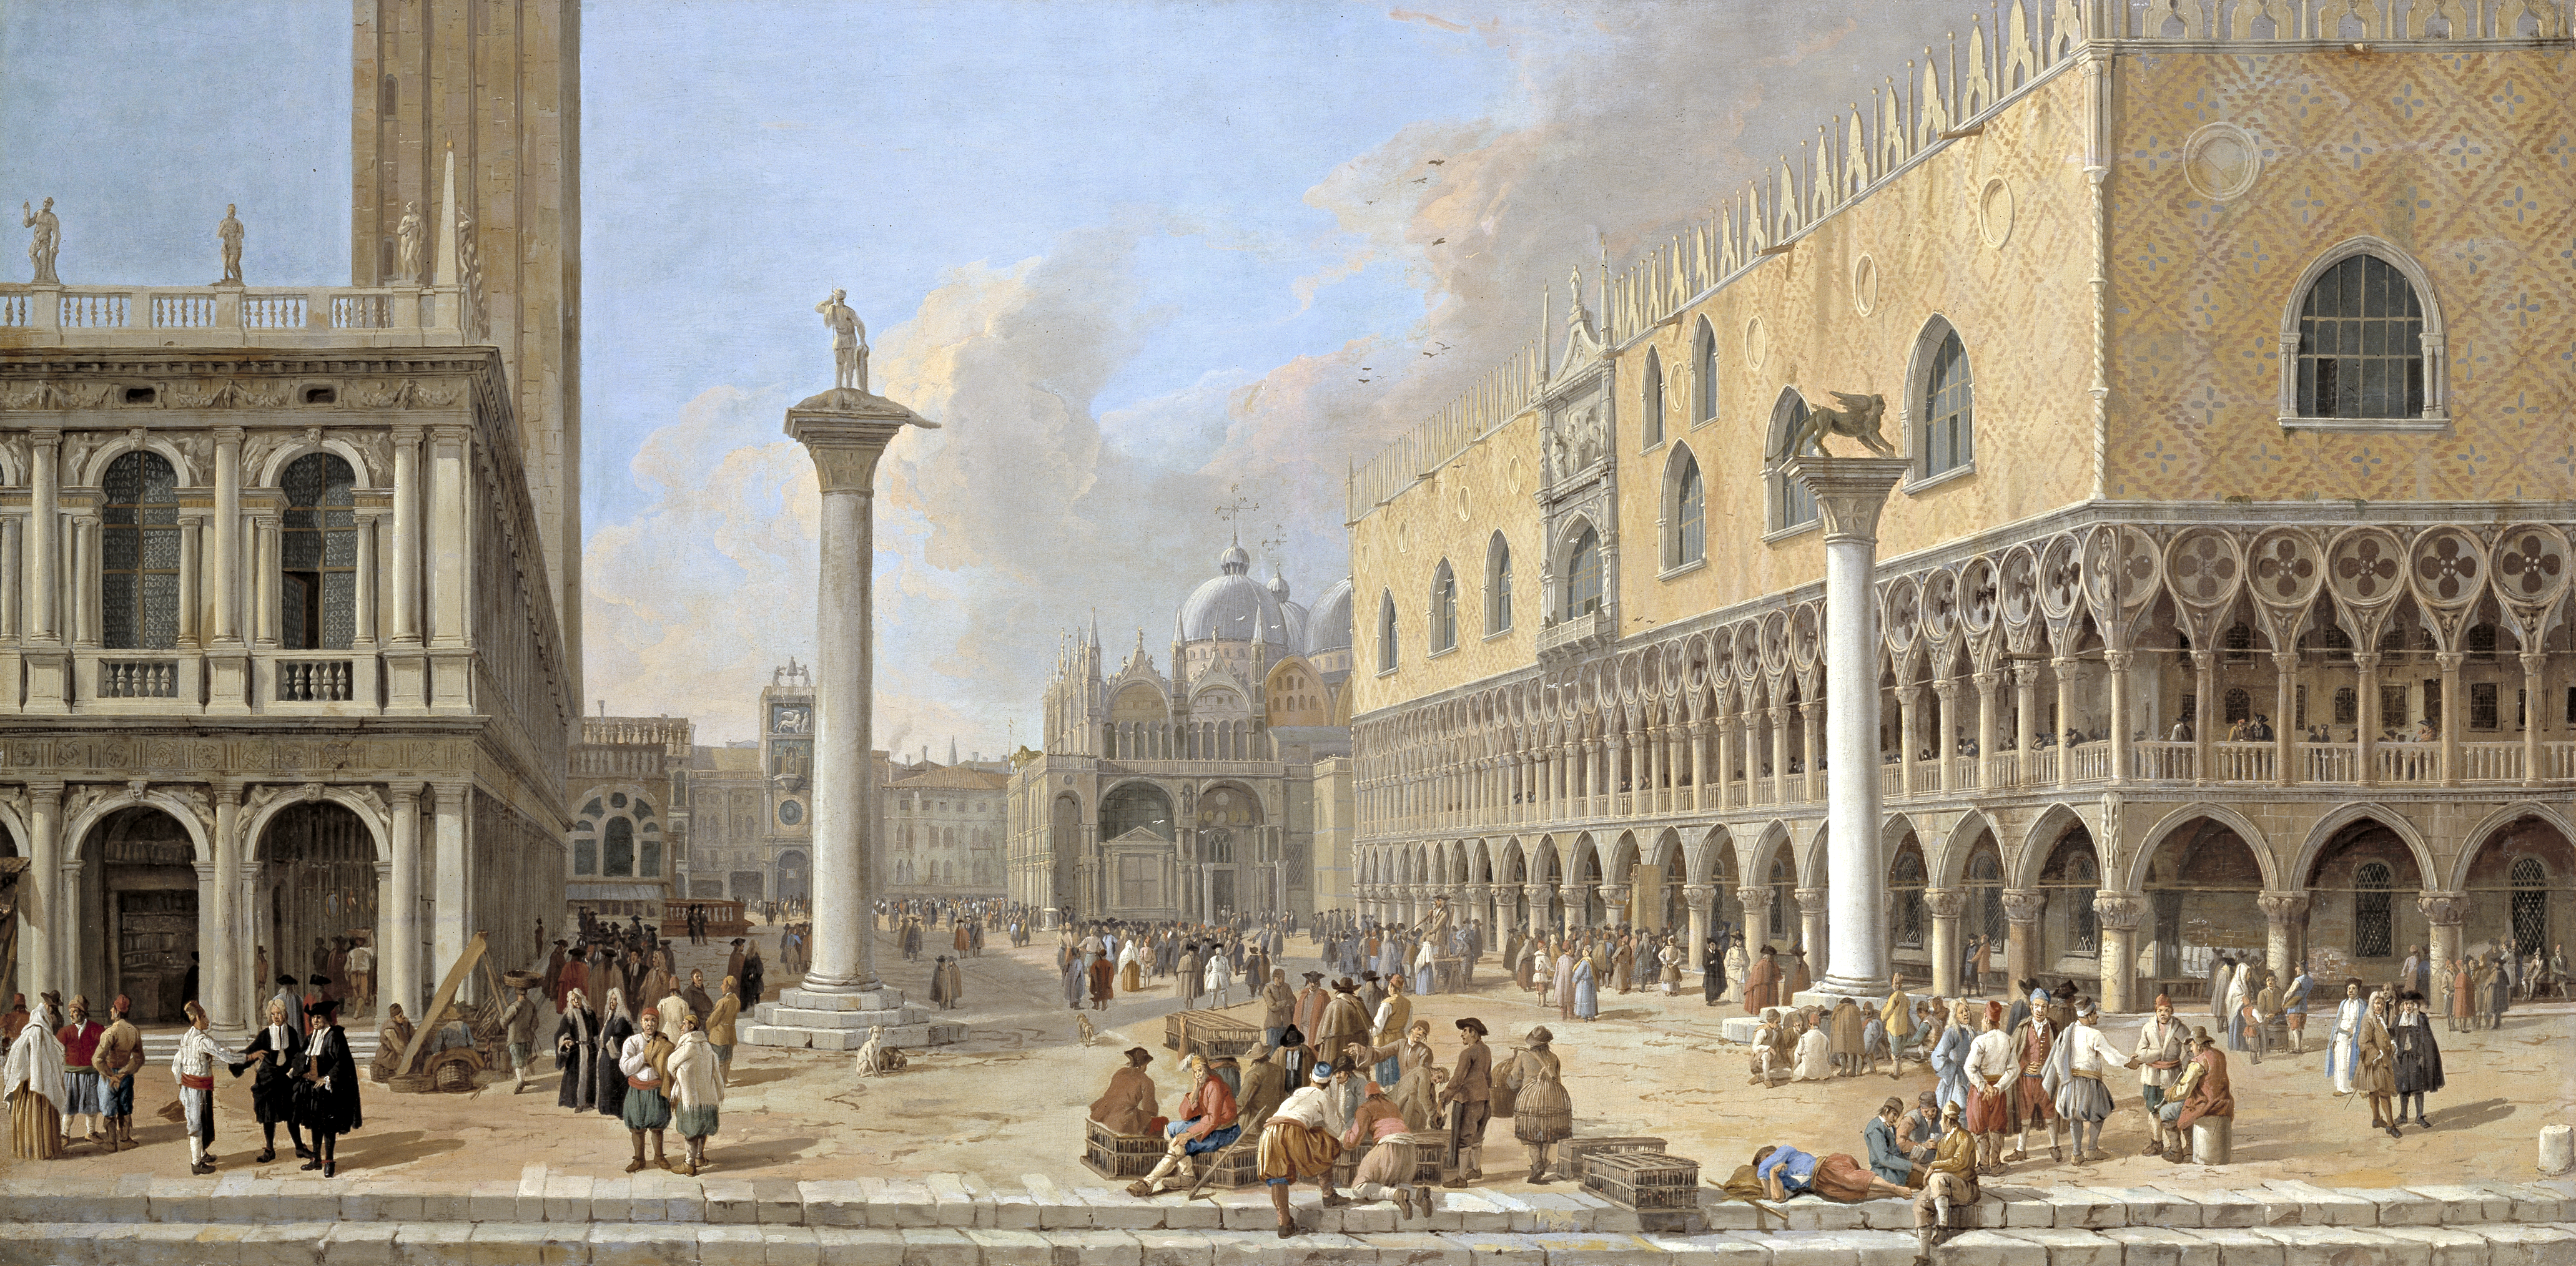 "The Piazzetta at Venice" by Luca Carlevarijs, ca. 1700-10